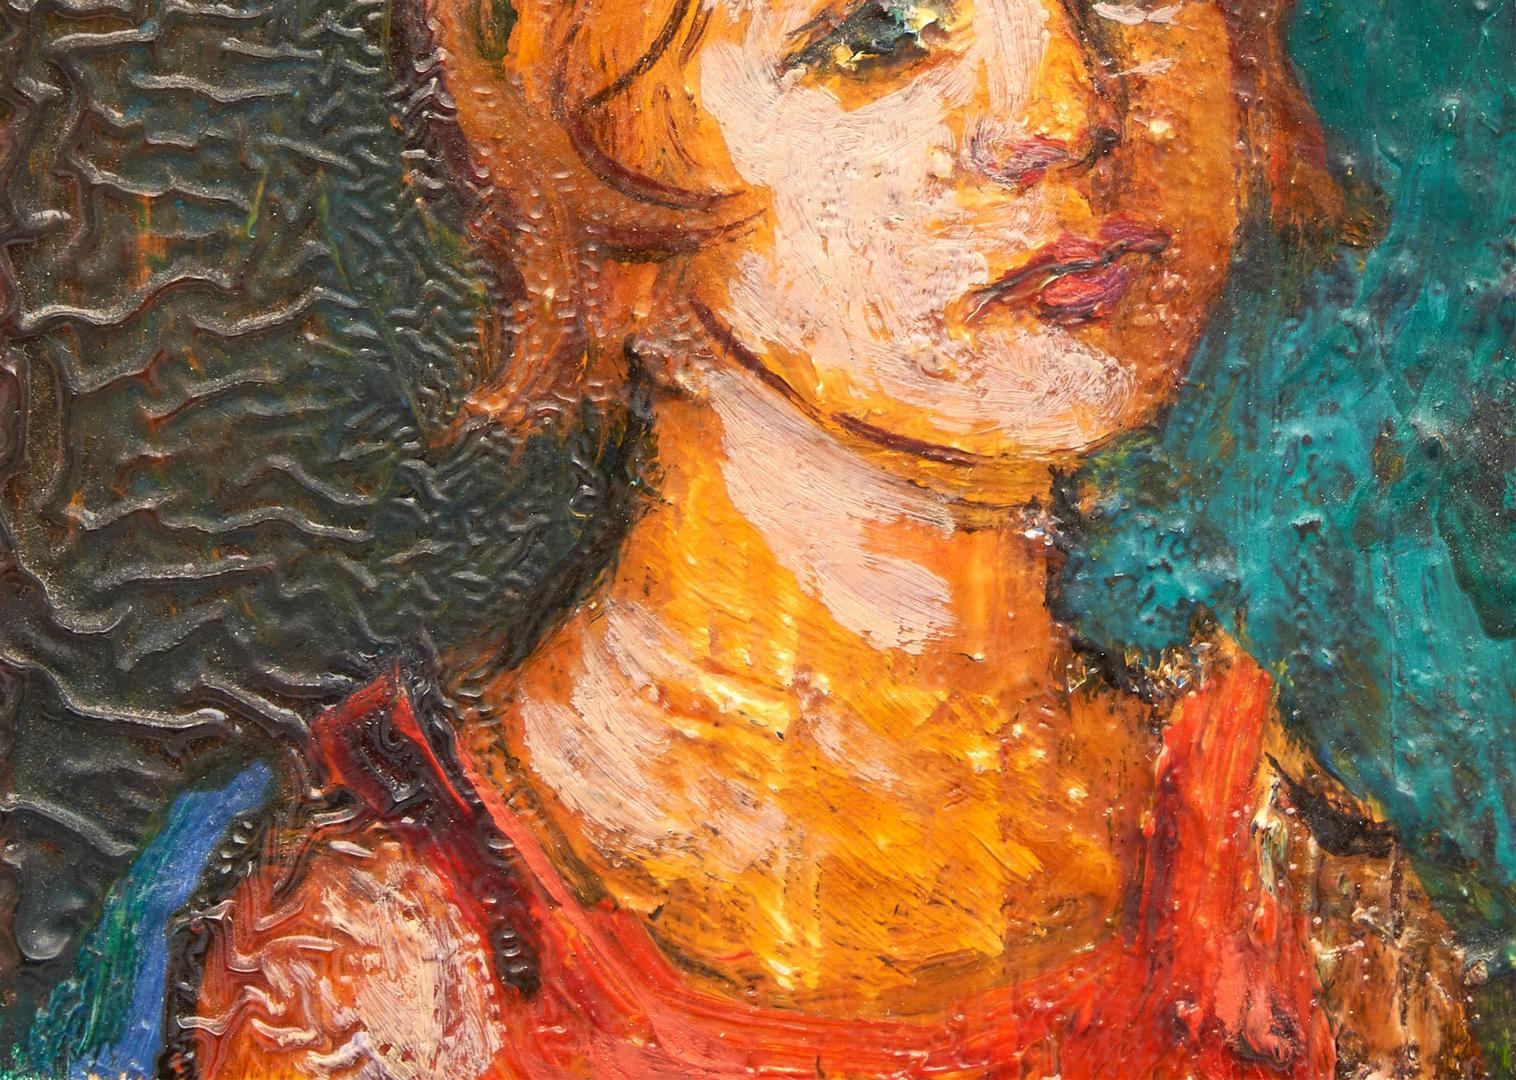 Lot 781: David Burliuk O/B, Portrait of a Young Woman